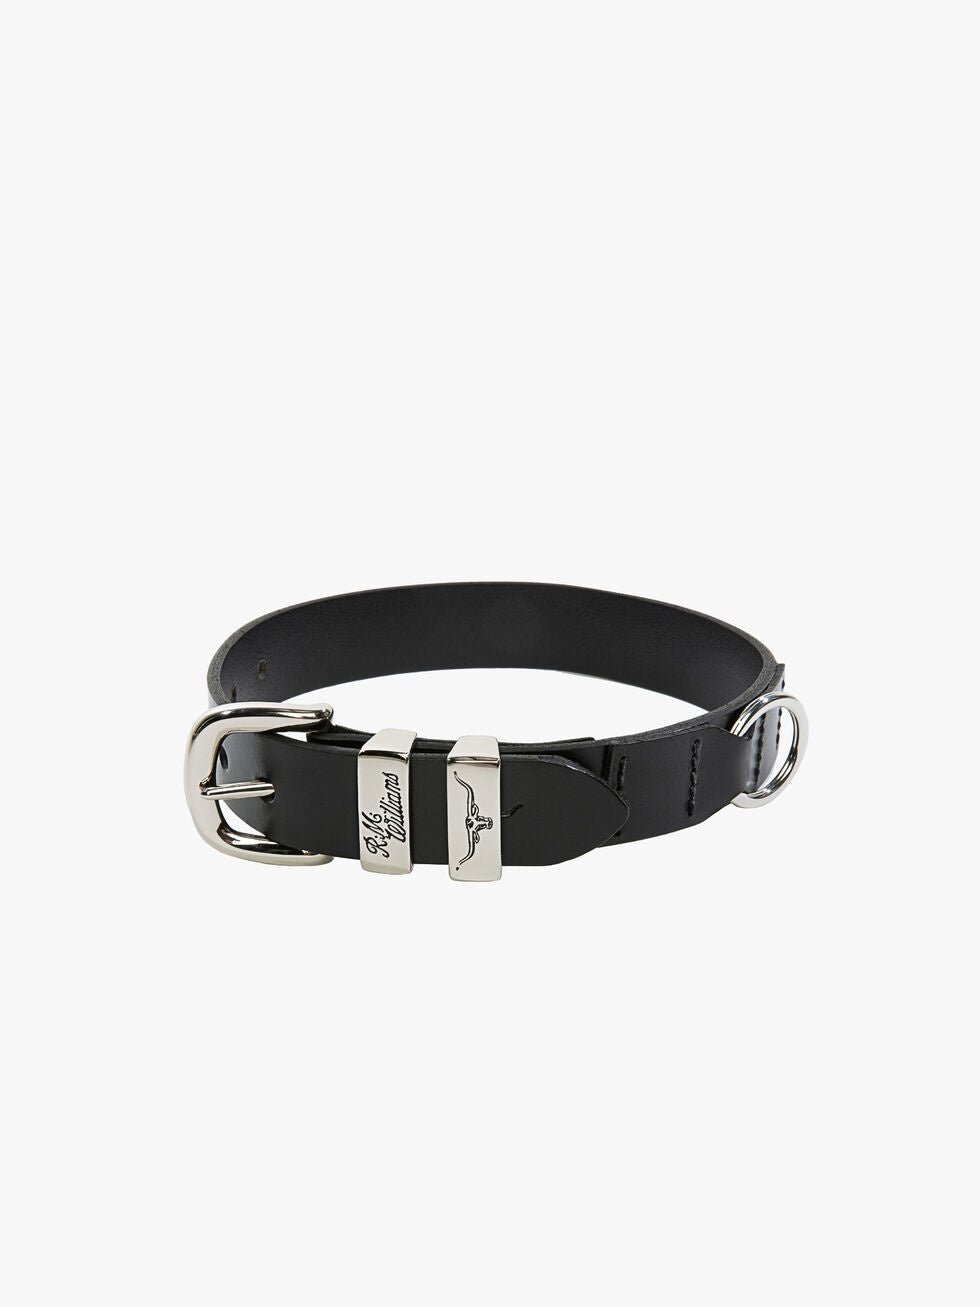 RMW Drover Dog Collar - Thomson's Suits Ltd - Black - - 41216